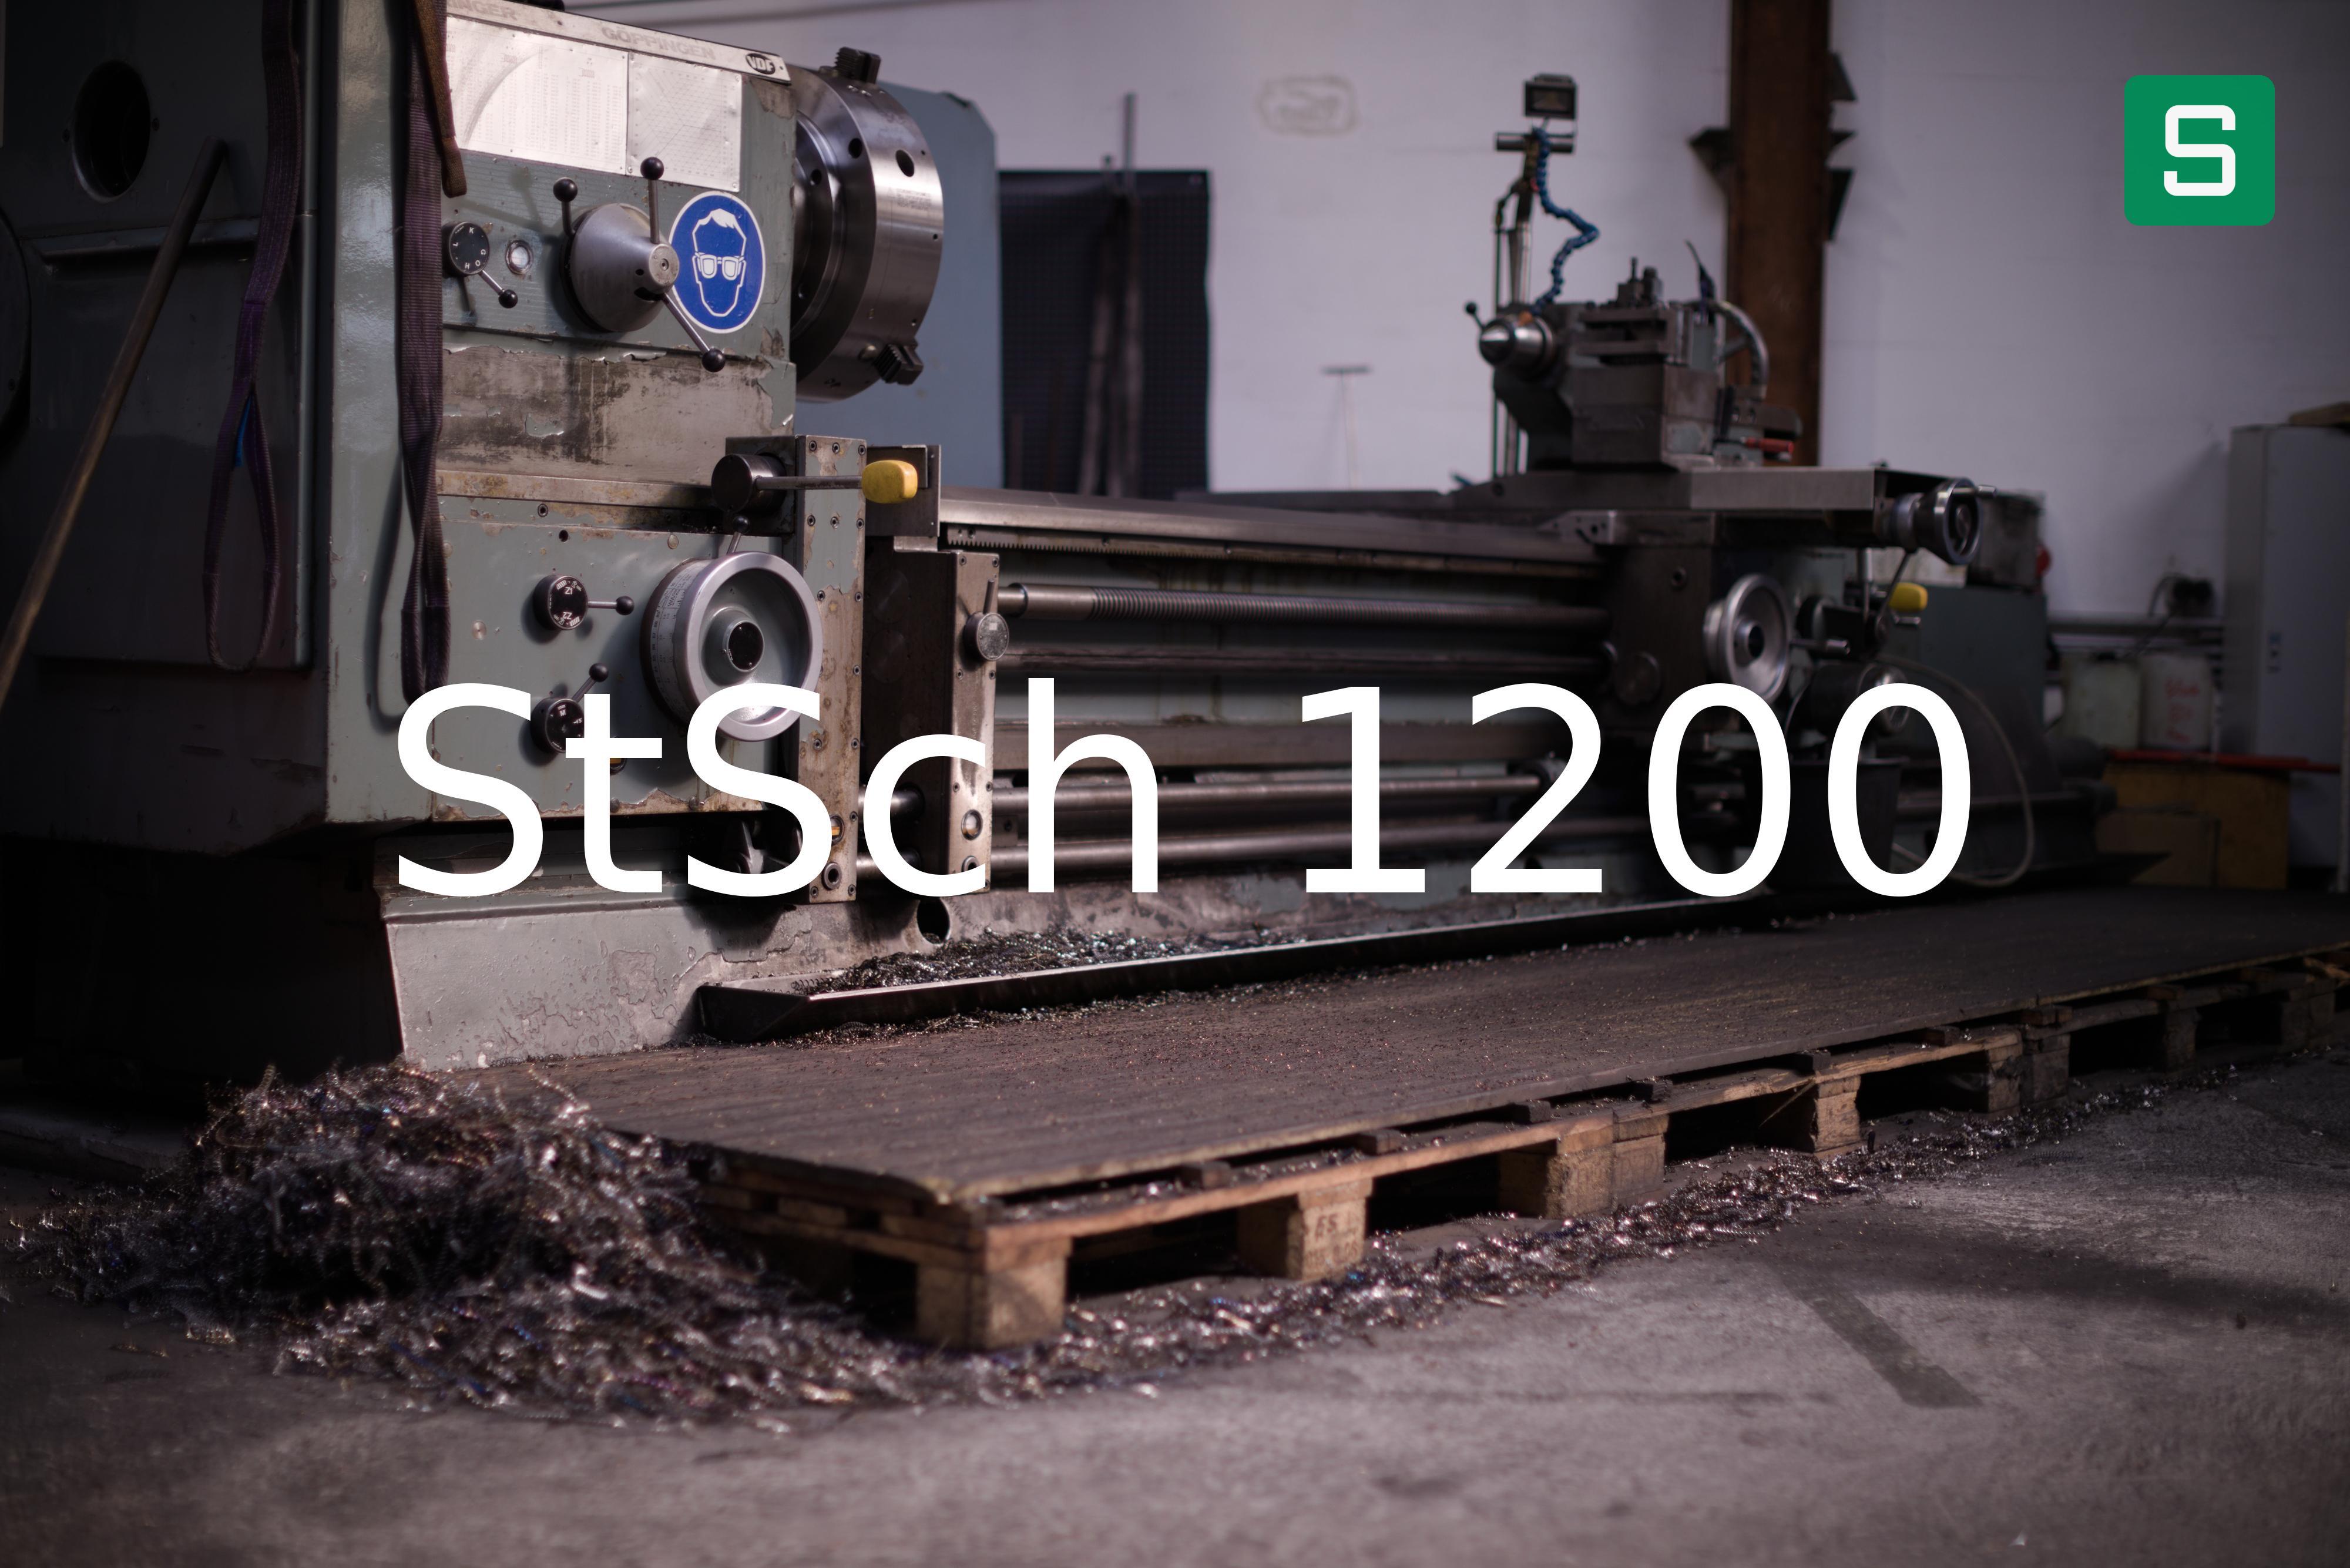 Steel Material: StSch 1200